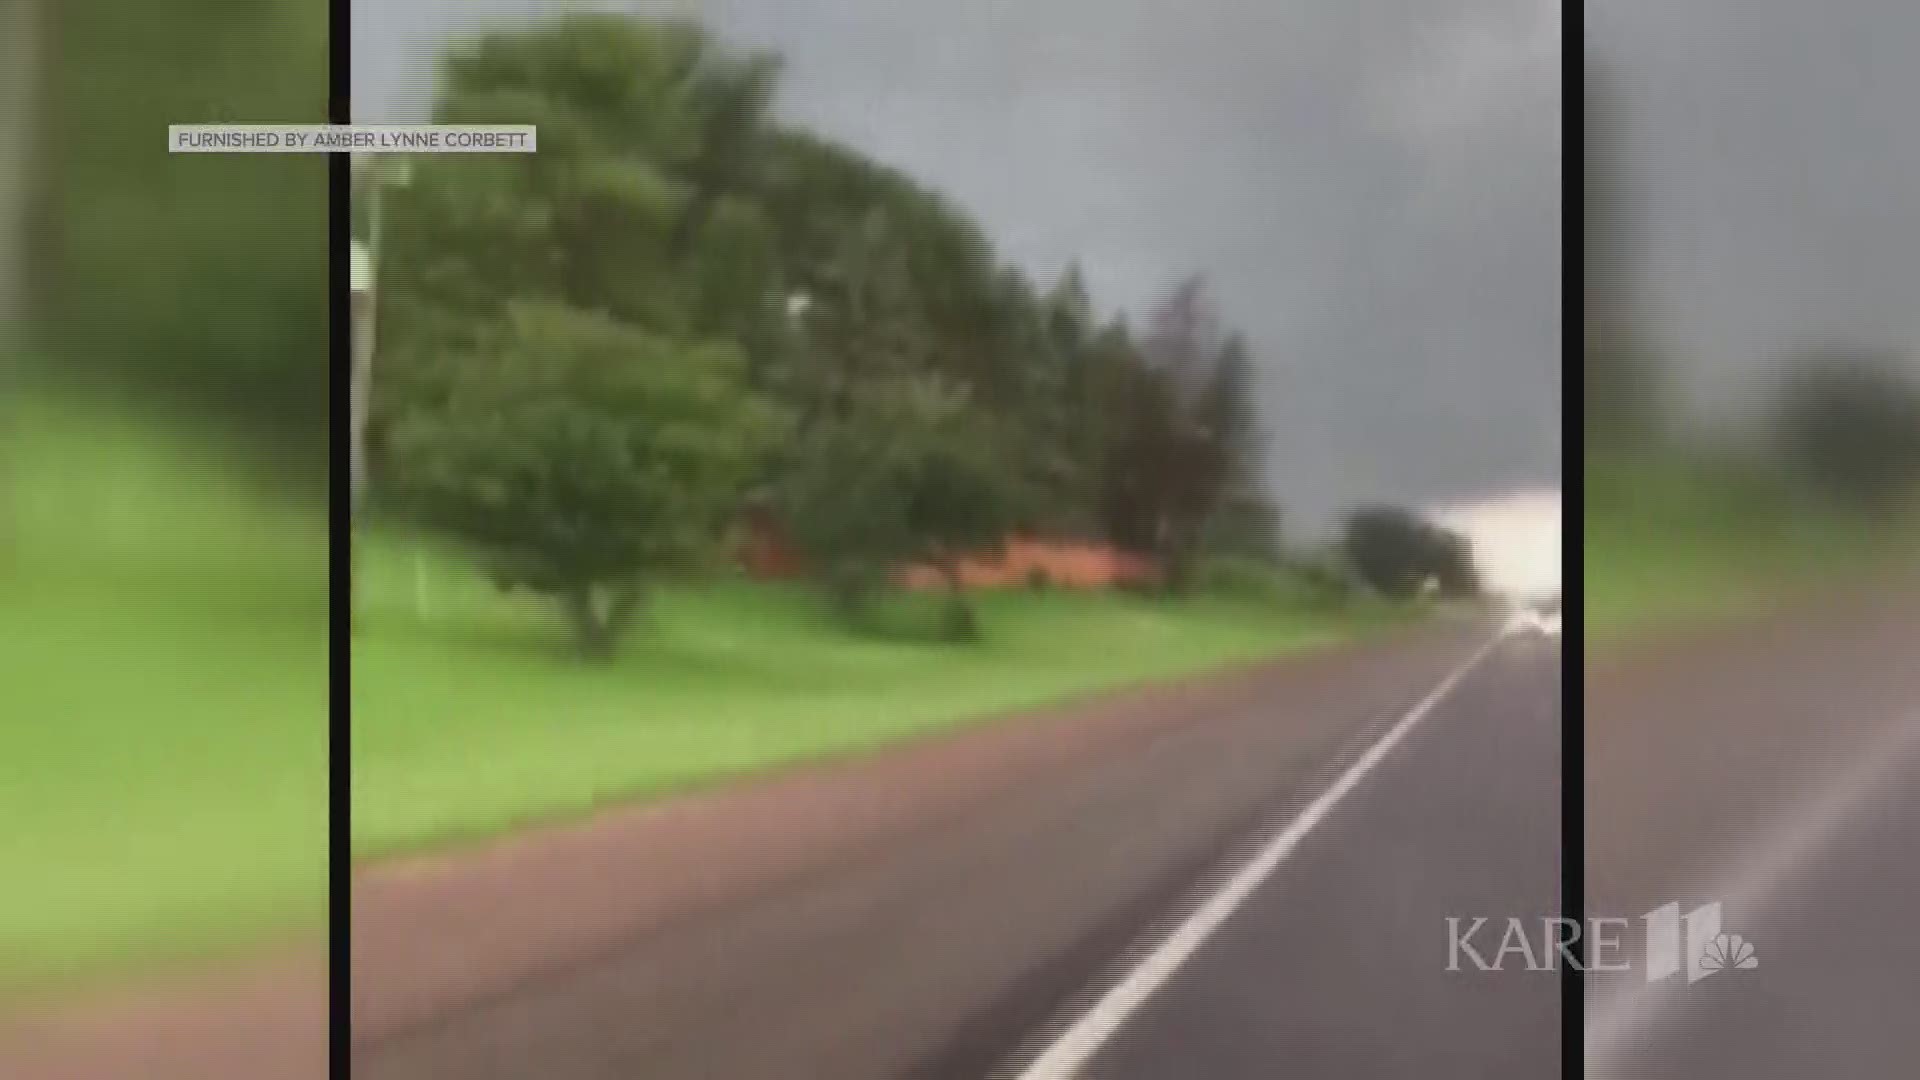 Amber Lynne Corbett shot this video from Silver Lake, Minnesota during a Tornado Warning on Sunday.